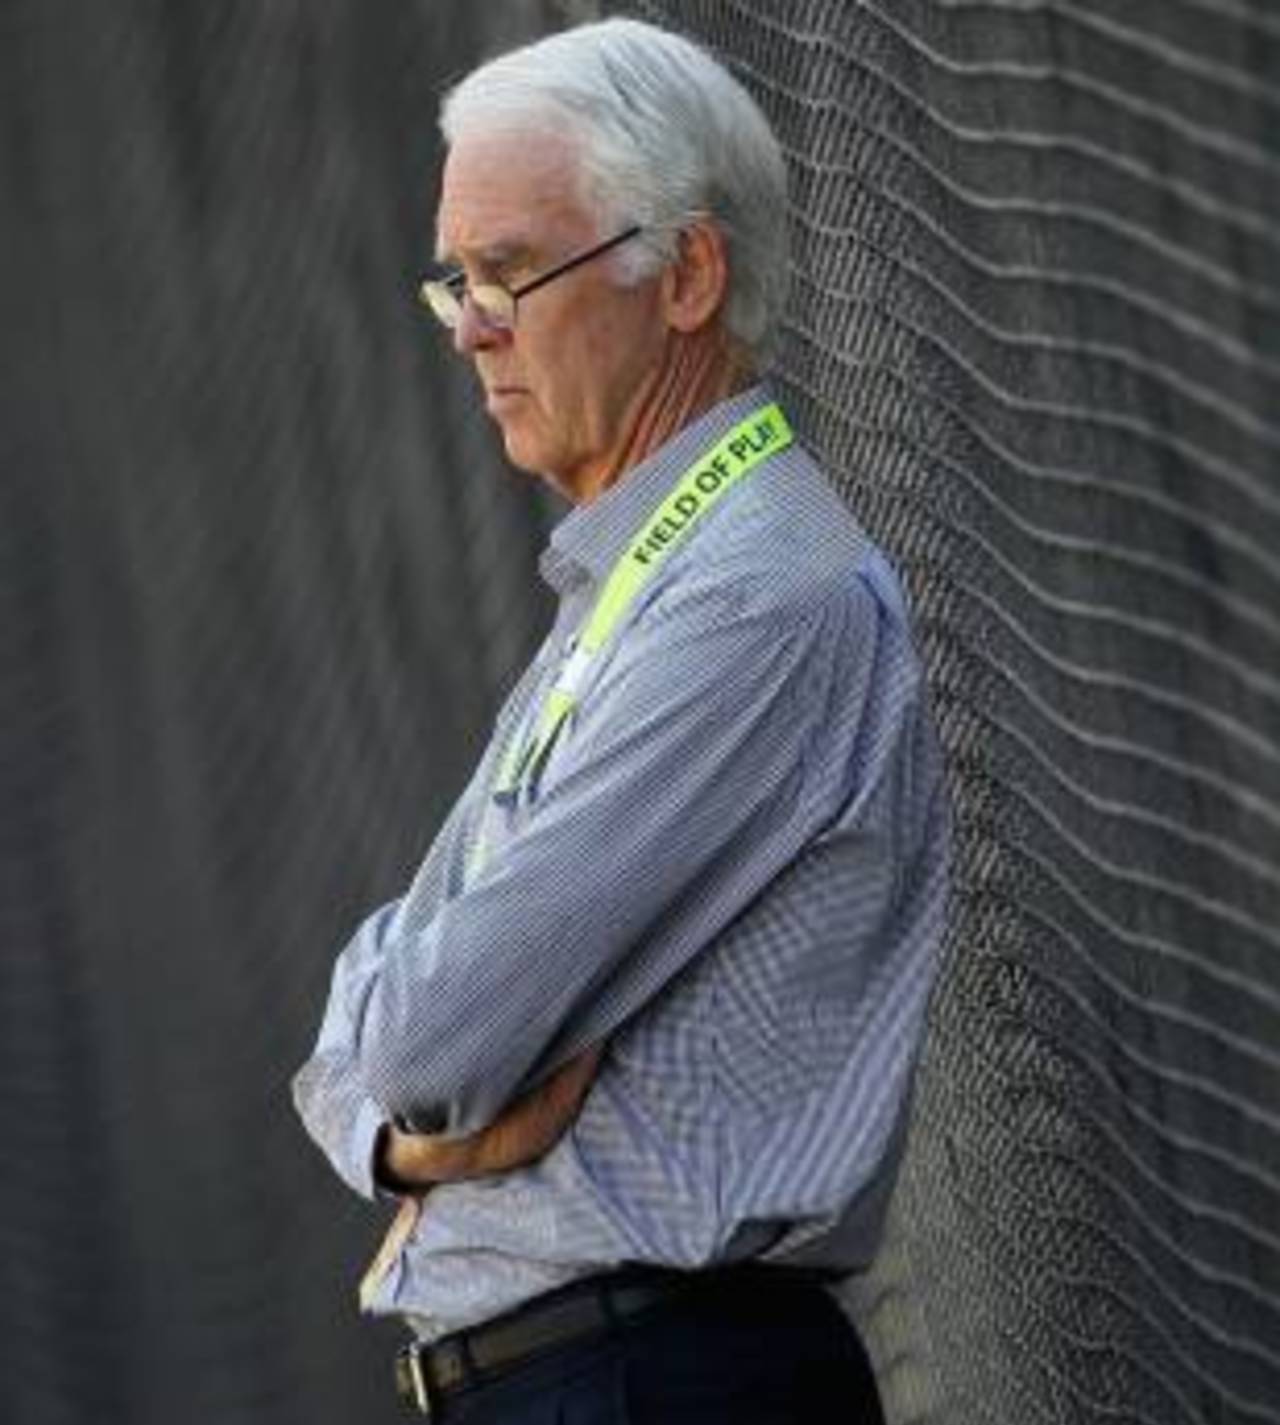 John Inverarity watches Australia's practice session, Melbourne, December 24, 2011